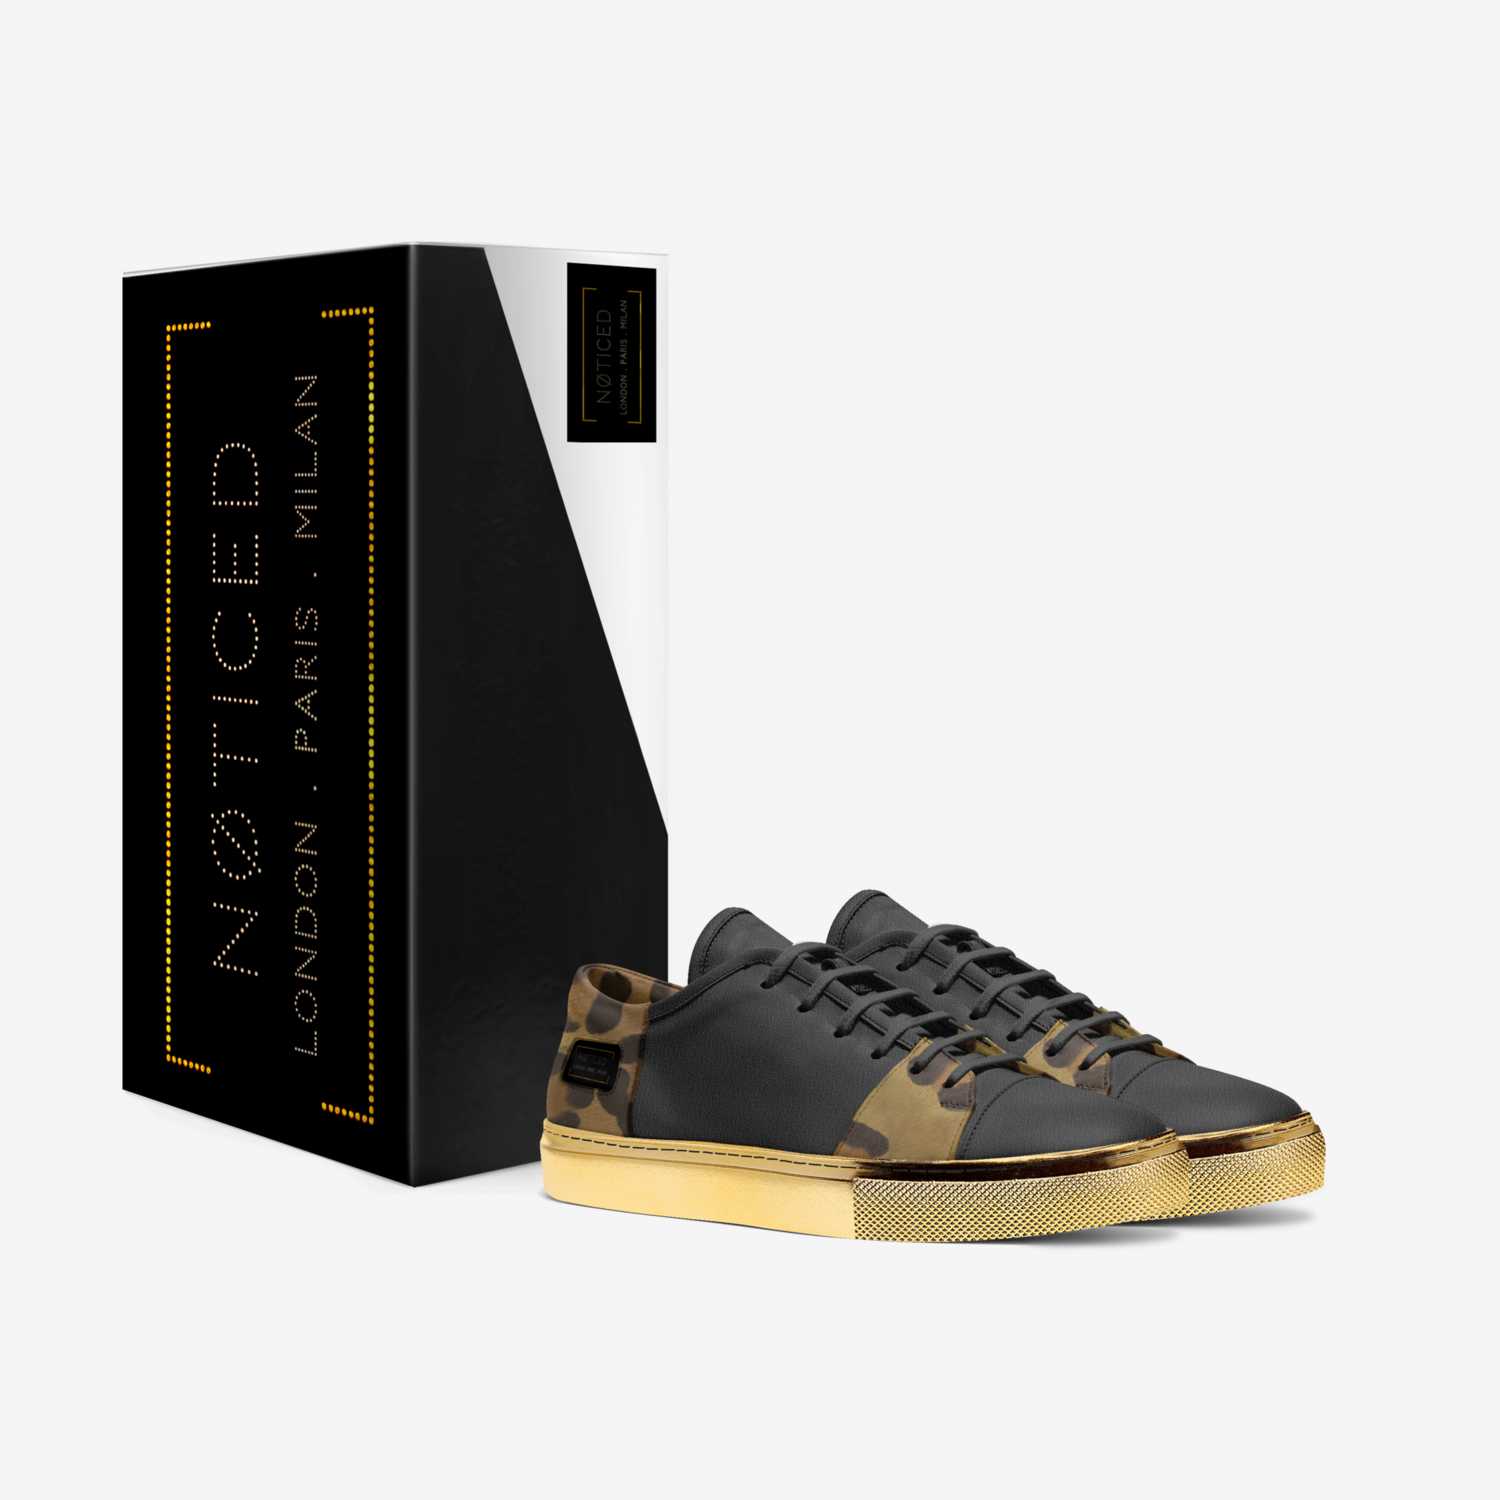 Ntcd3 custom made in Italy shoes by Bo Otudeko | Box view